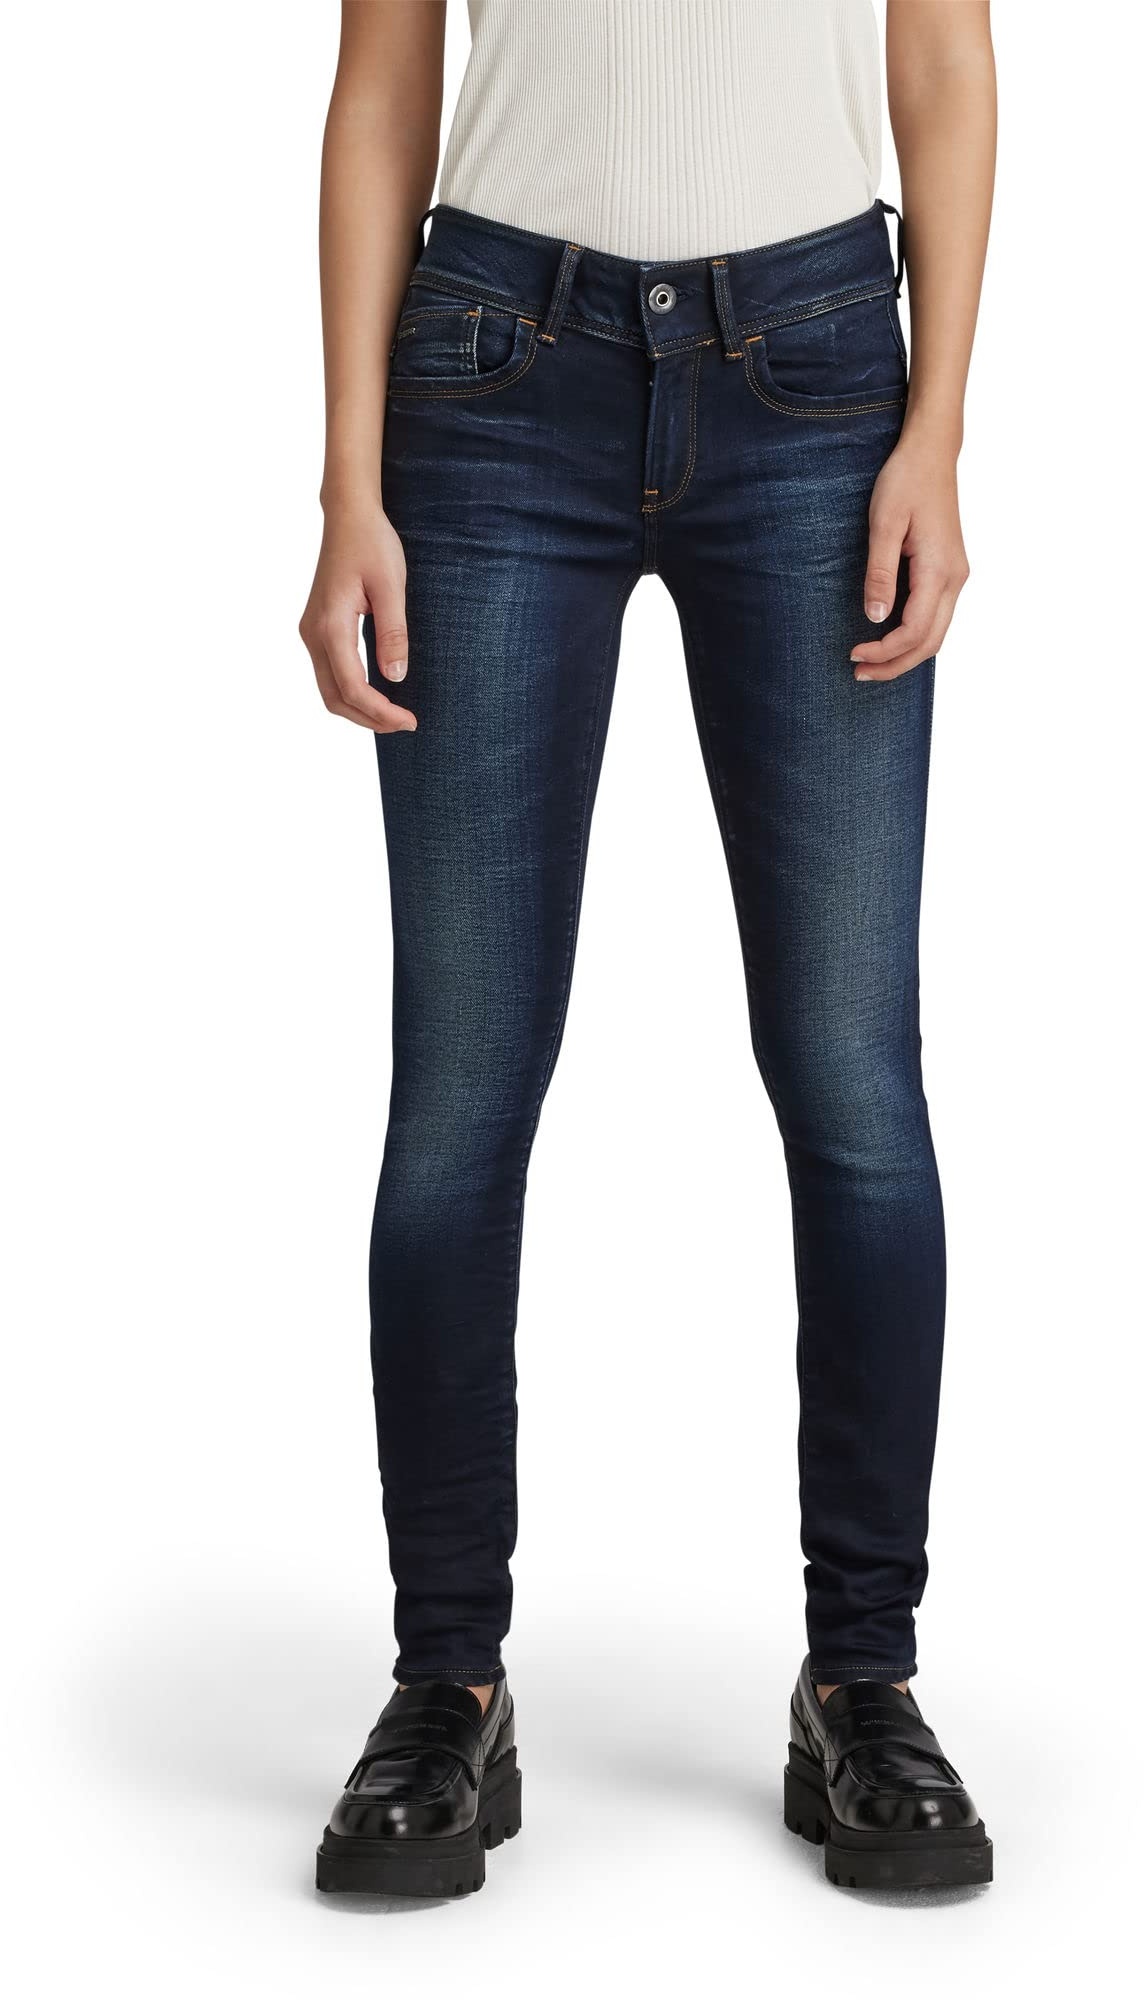 G-STAR RAW Damen Lynn Mid Waist Skinny Jeans, Blau (medium aged 60885-6131-071), 25W / 28L